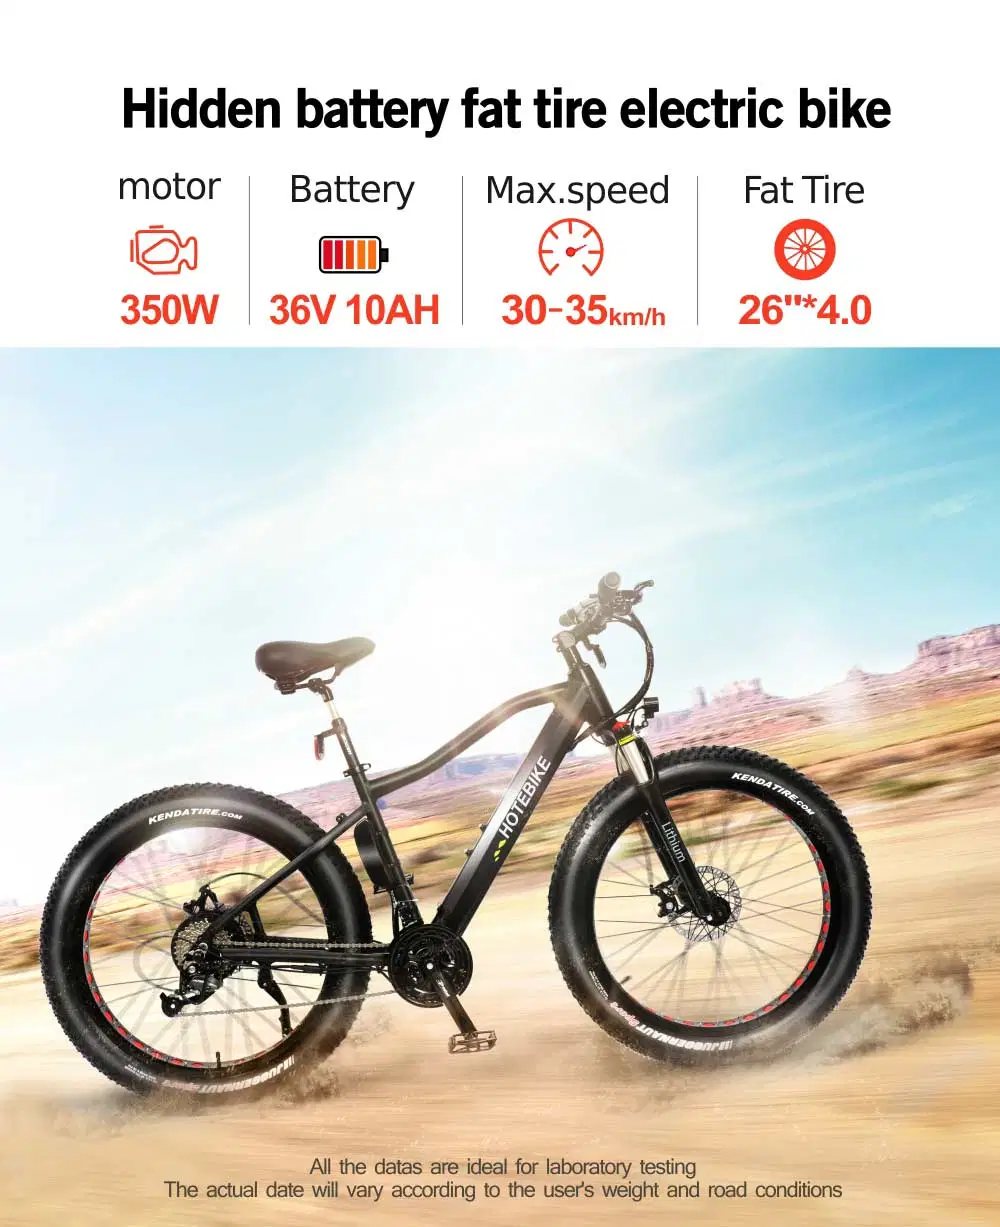 Brand New Fat Mountain Aluminum Alloy Frame Electric Motocross Bike 1000W Electric Bike